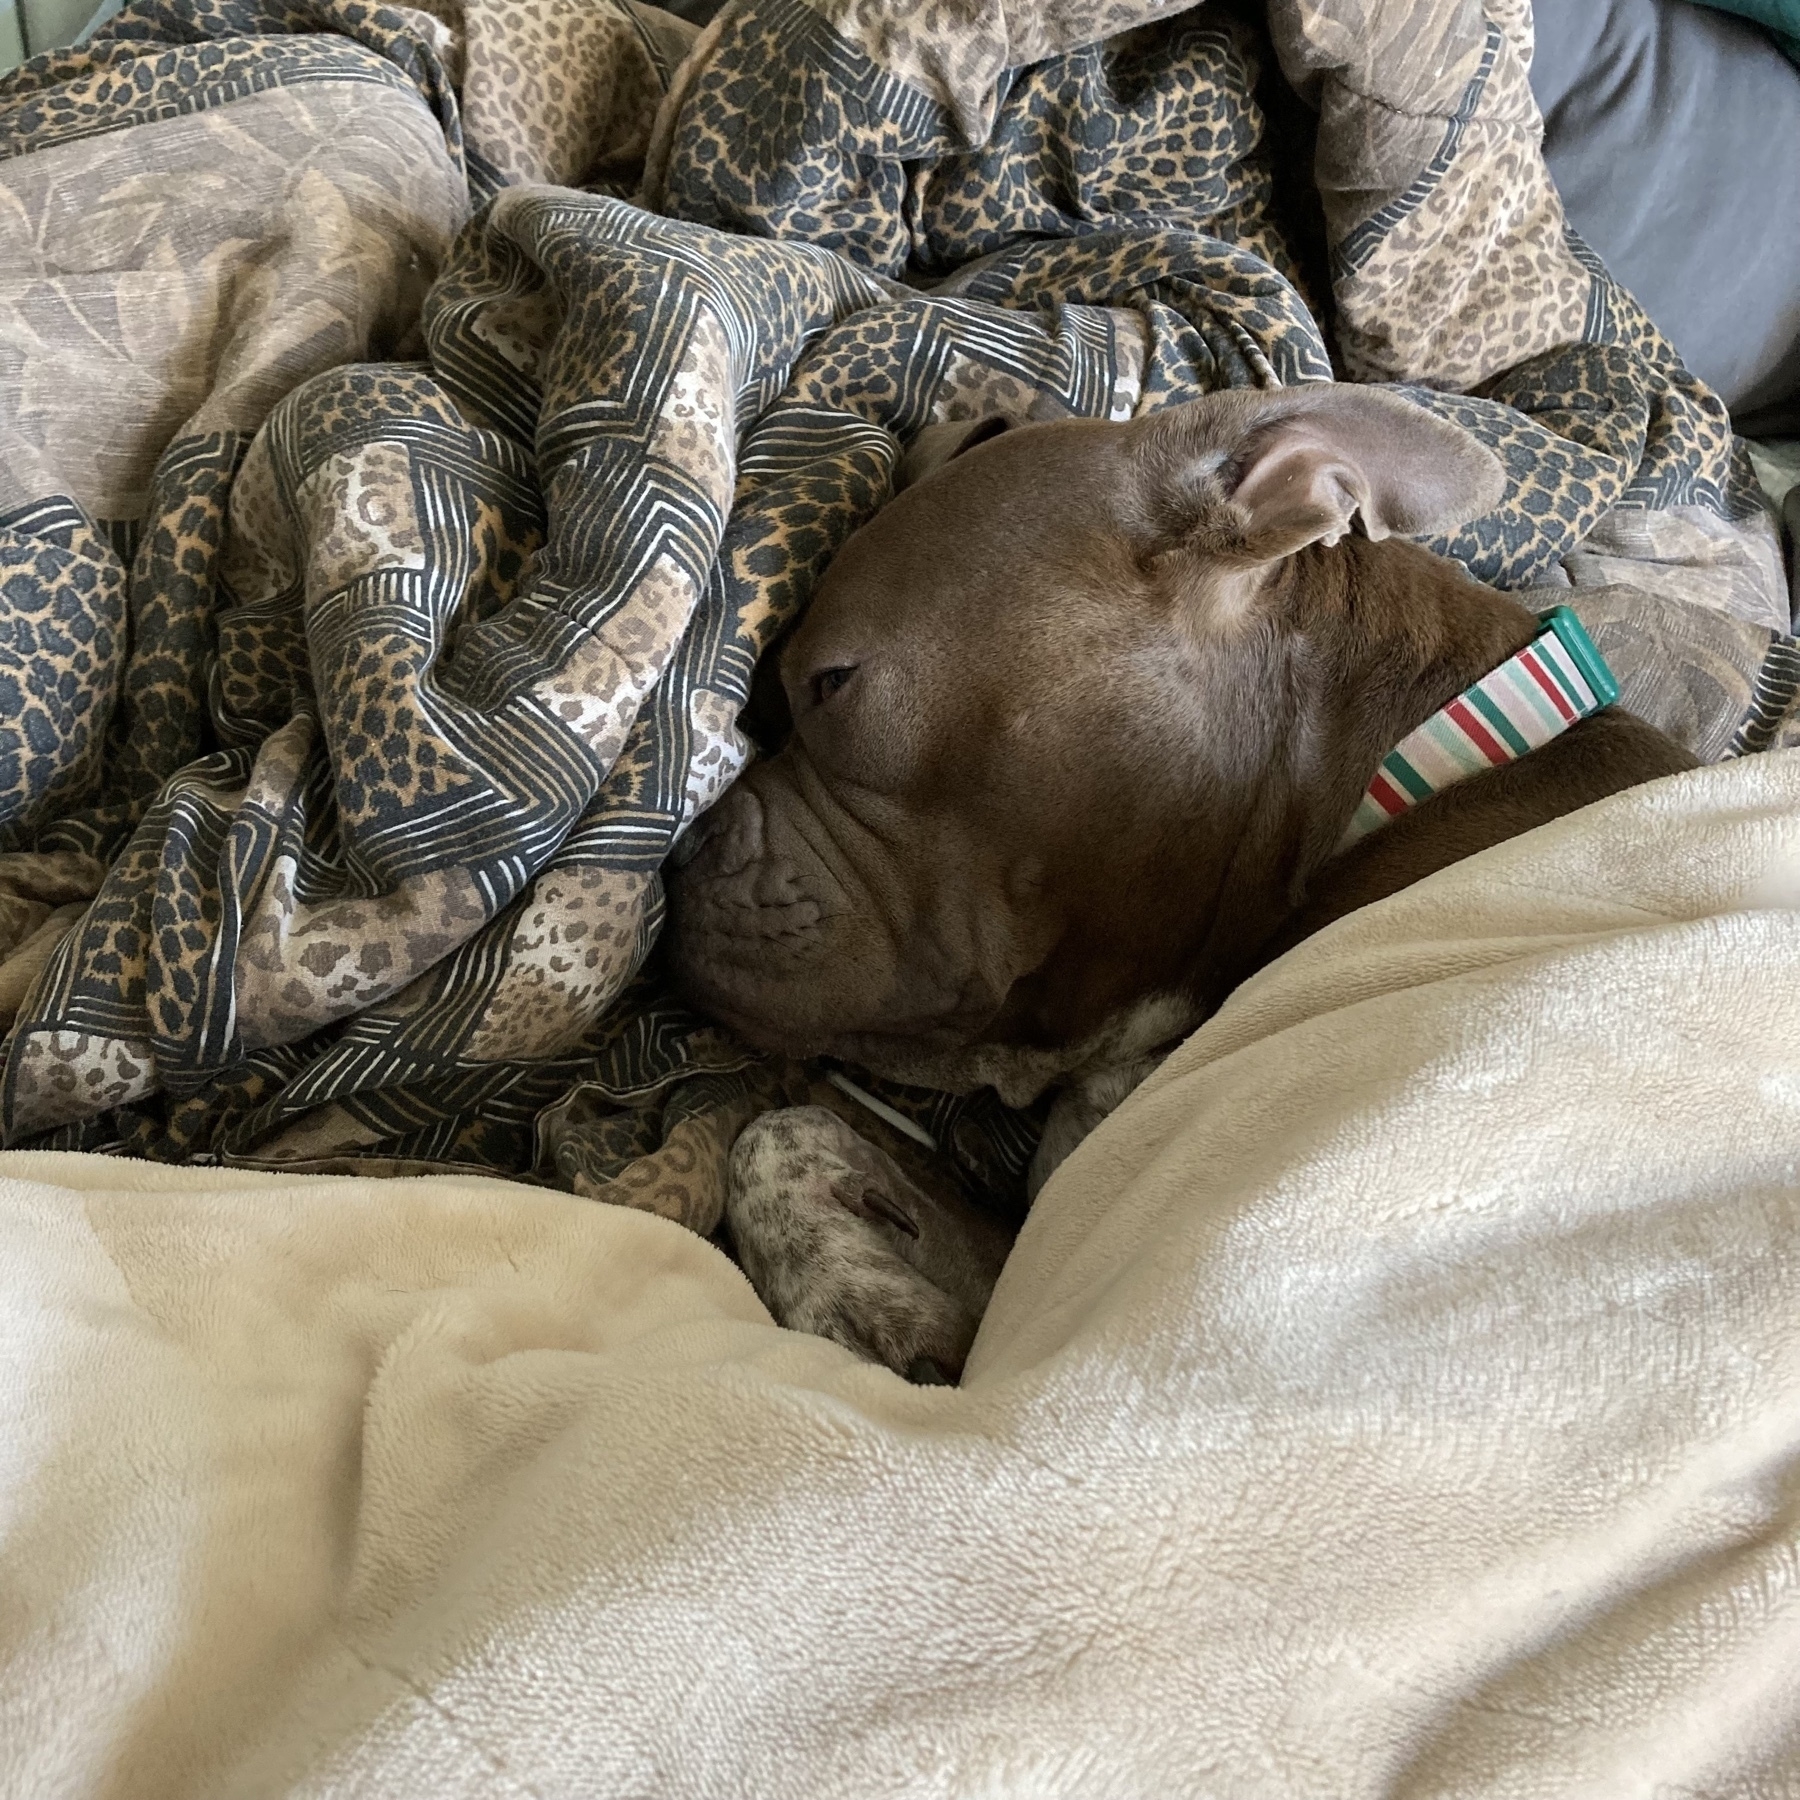 Dog in blankets. 